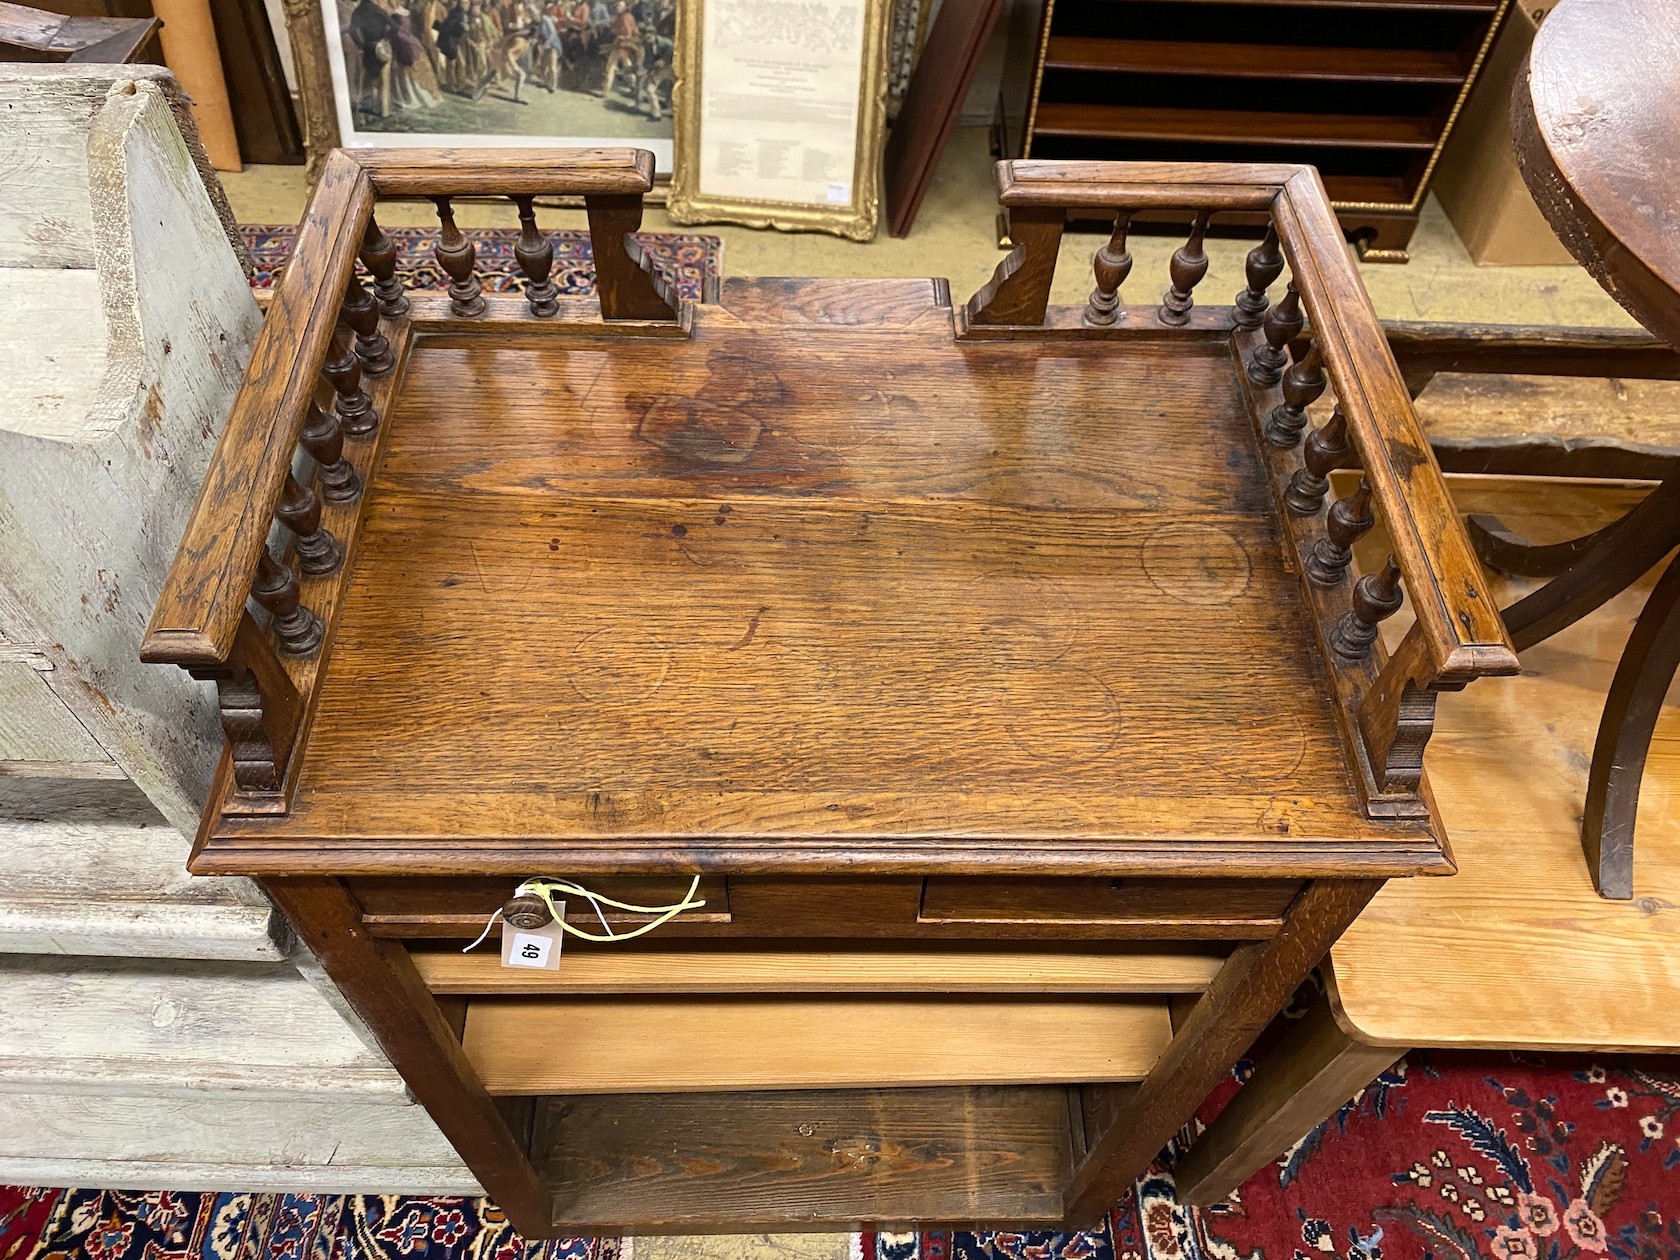 An early 20th century French oak clerk's desk, width 70cm, depth 50cm, height 112cm - Image 2 of 2